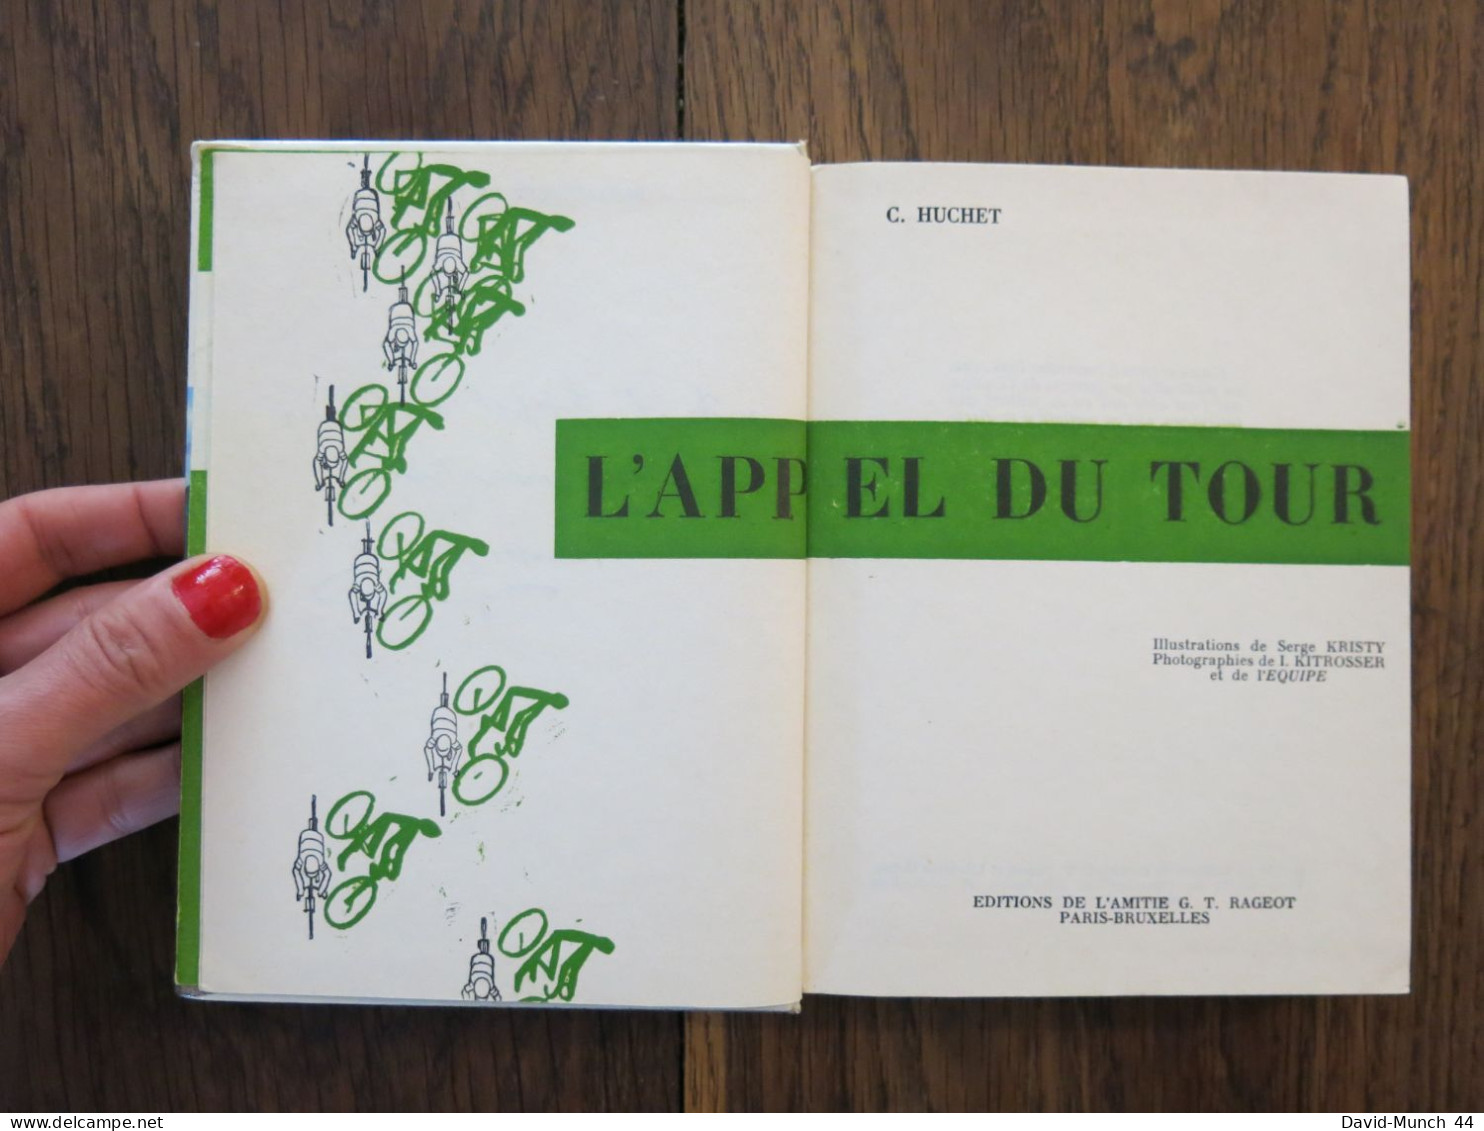 L'appel du tour de C. Huchet. Bibliothèque de l'Amitié 1962